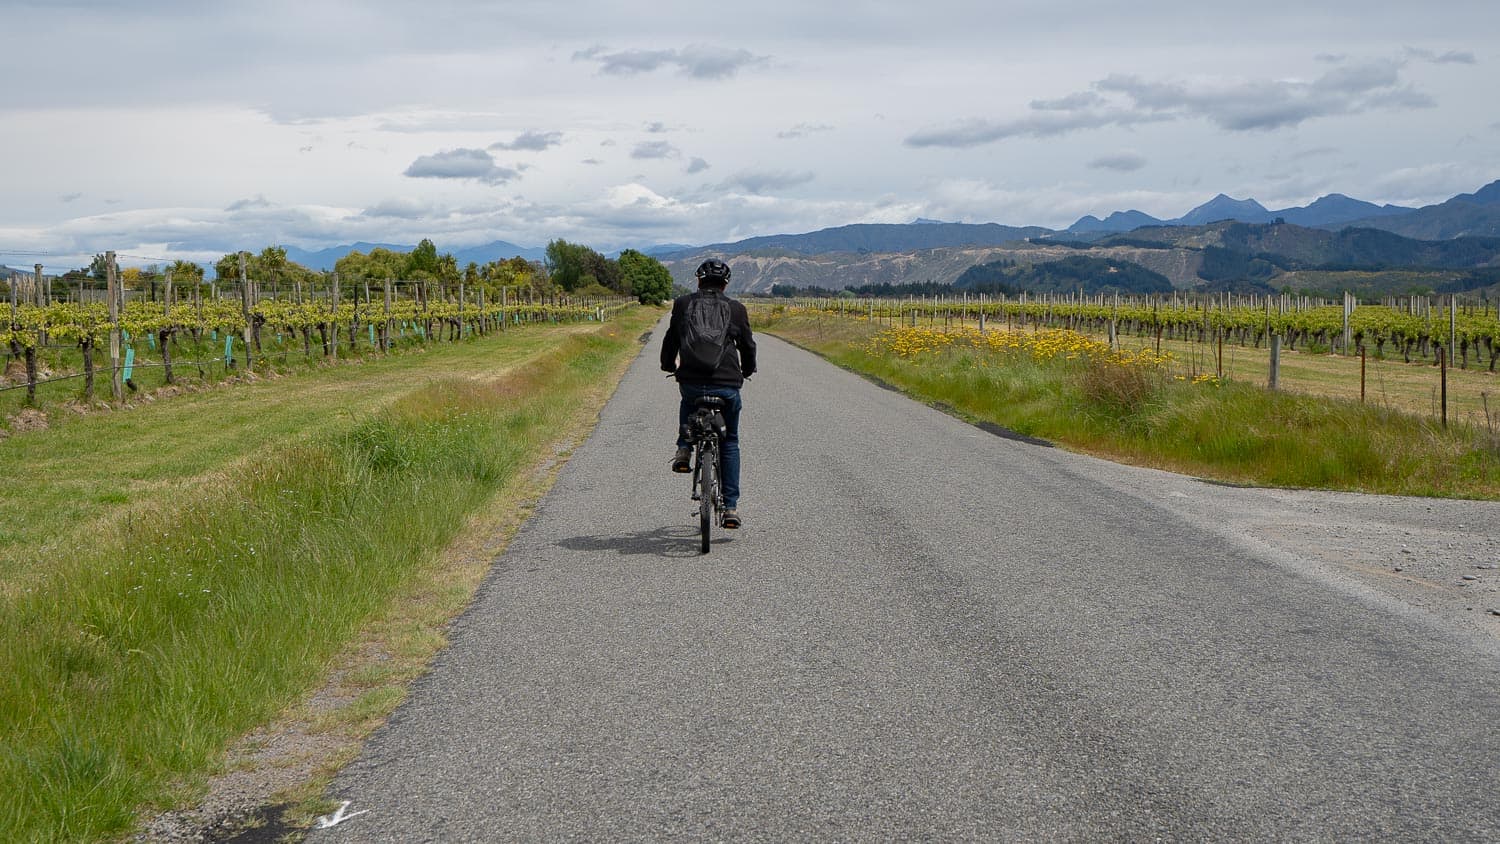 Cycling through the vineyards of Marlborough, New Zealand